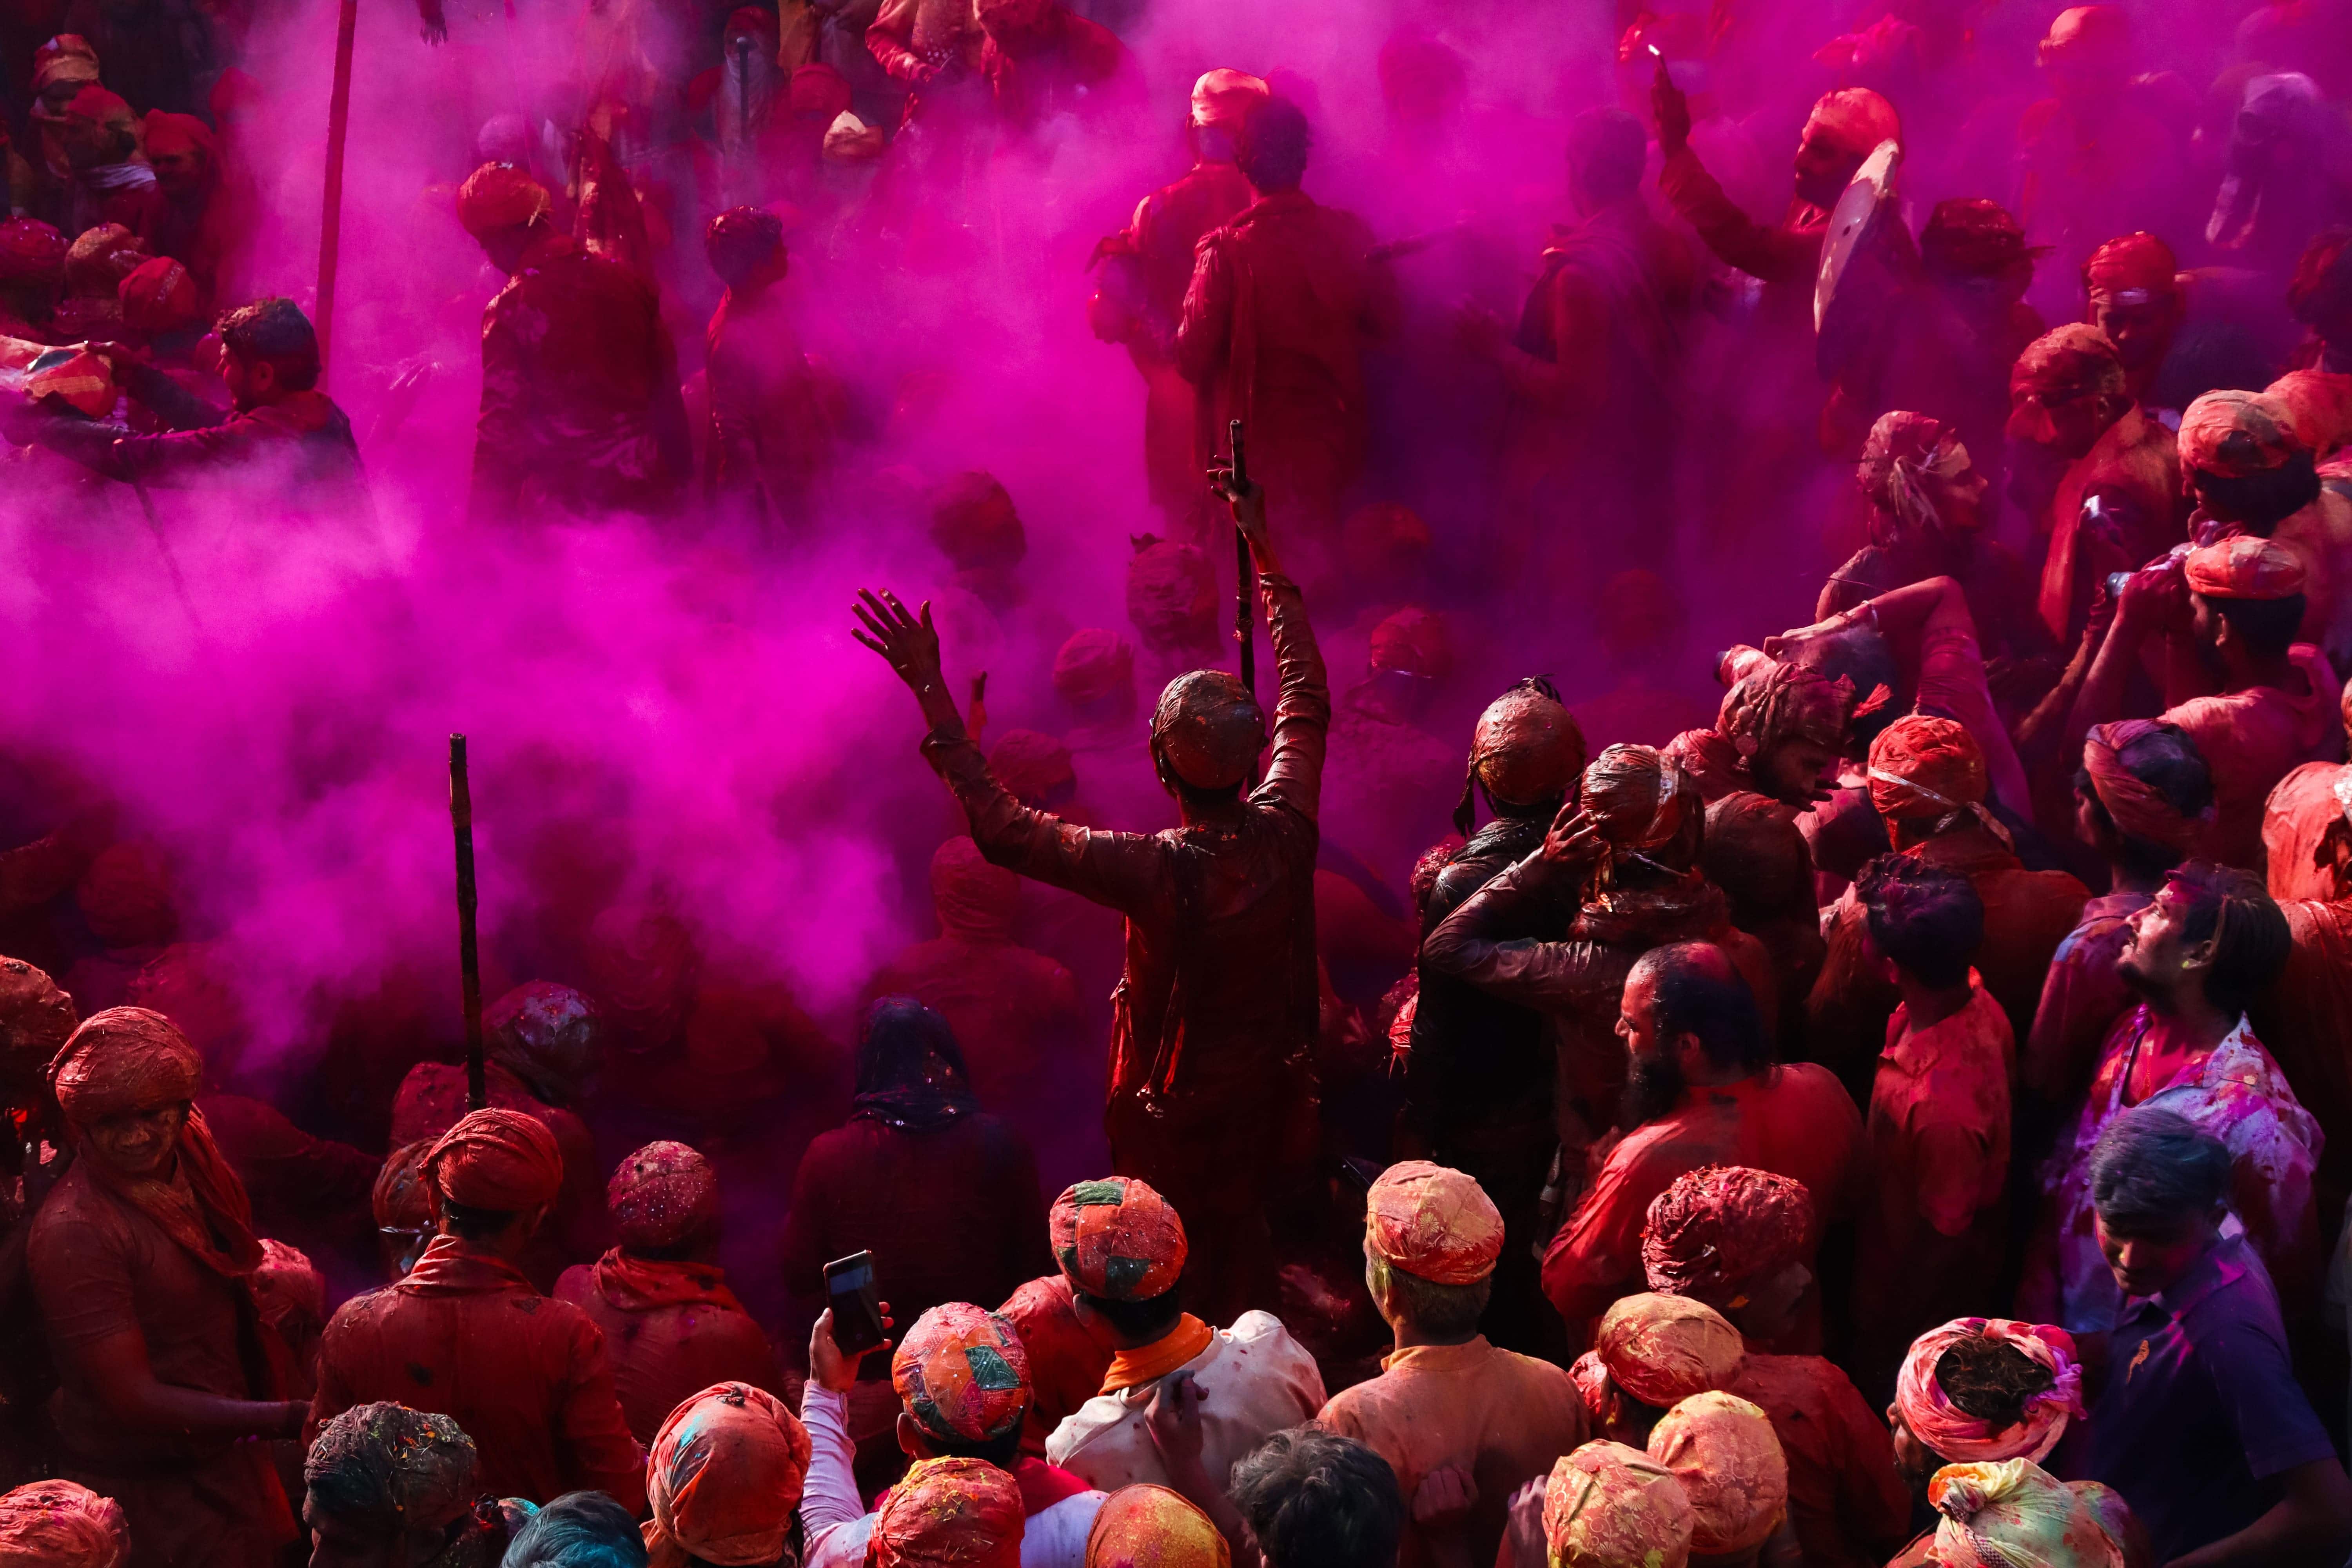 Holi - The Festival of Colors & Love!